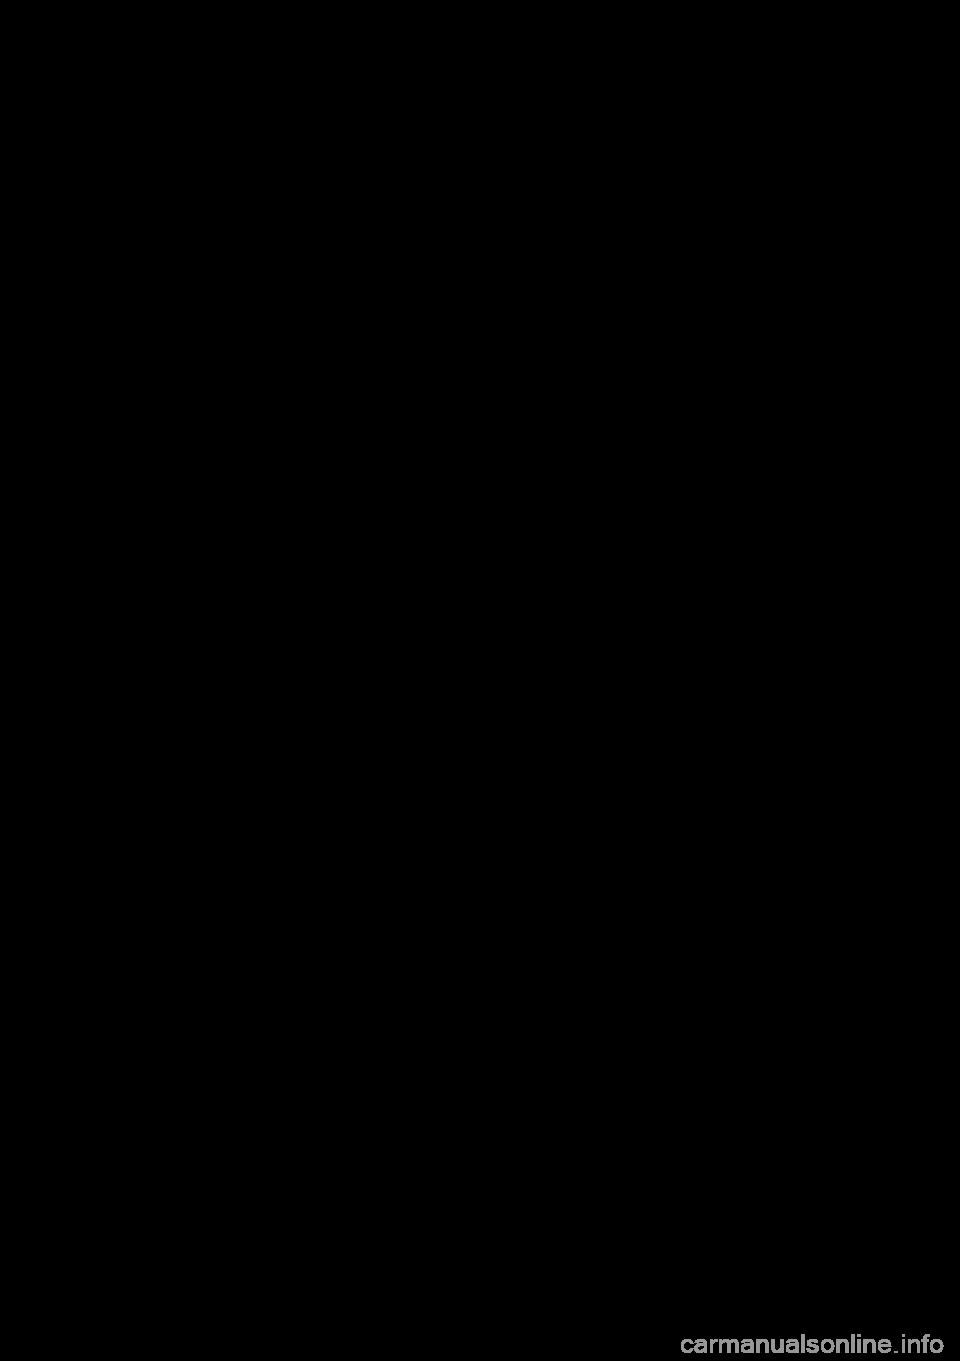 SUZUKI GRAND VITARA 2001 2.G Service Workshop Manual YH4
GRAND
VITARA
GENERAL INFORMATION 0A-21
A
ABS : Anti-lock Brake System
ATDC : After Top Dead Center
API : American Petroleum Institute
ATF : Automatic Transmission Fluid
ALR : Automatic Locking Ret